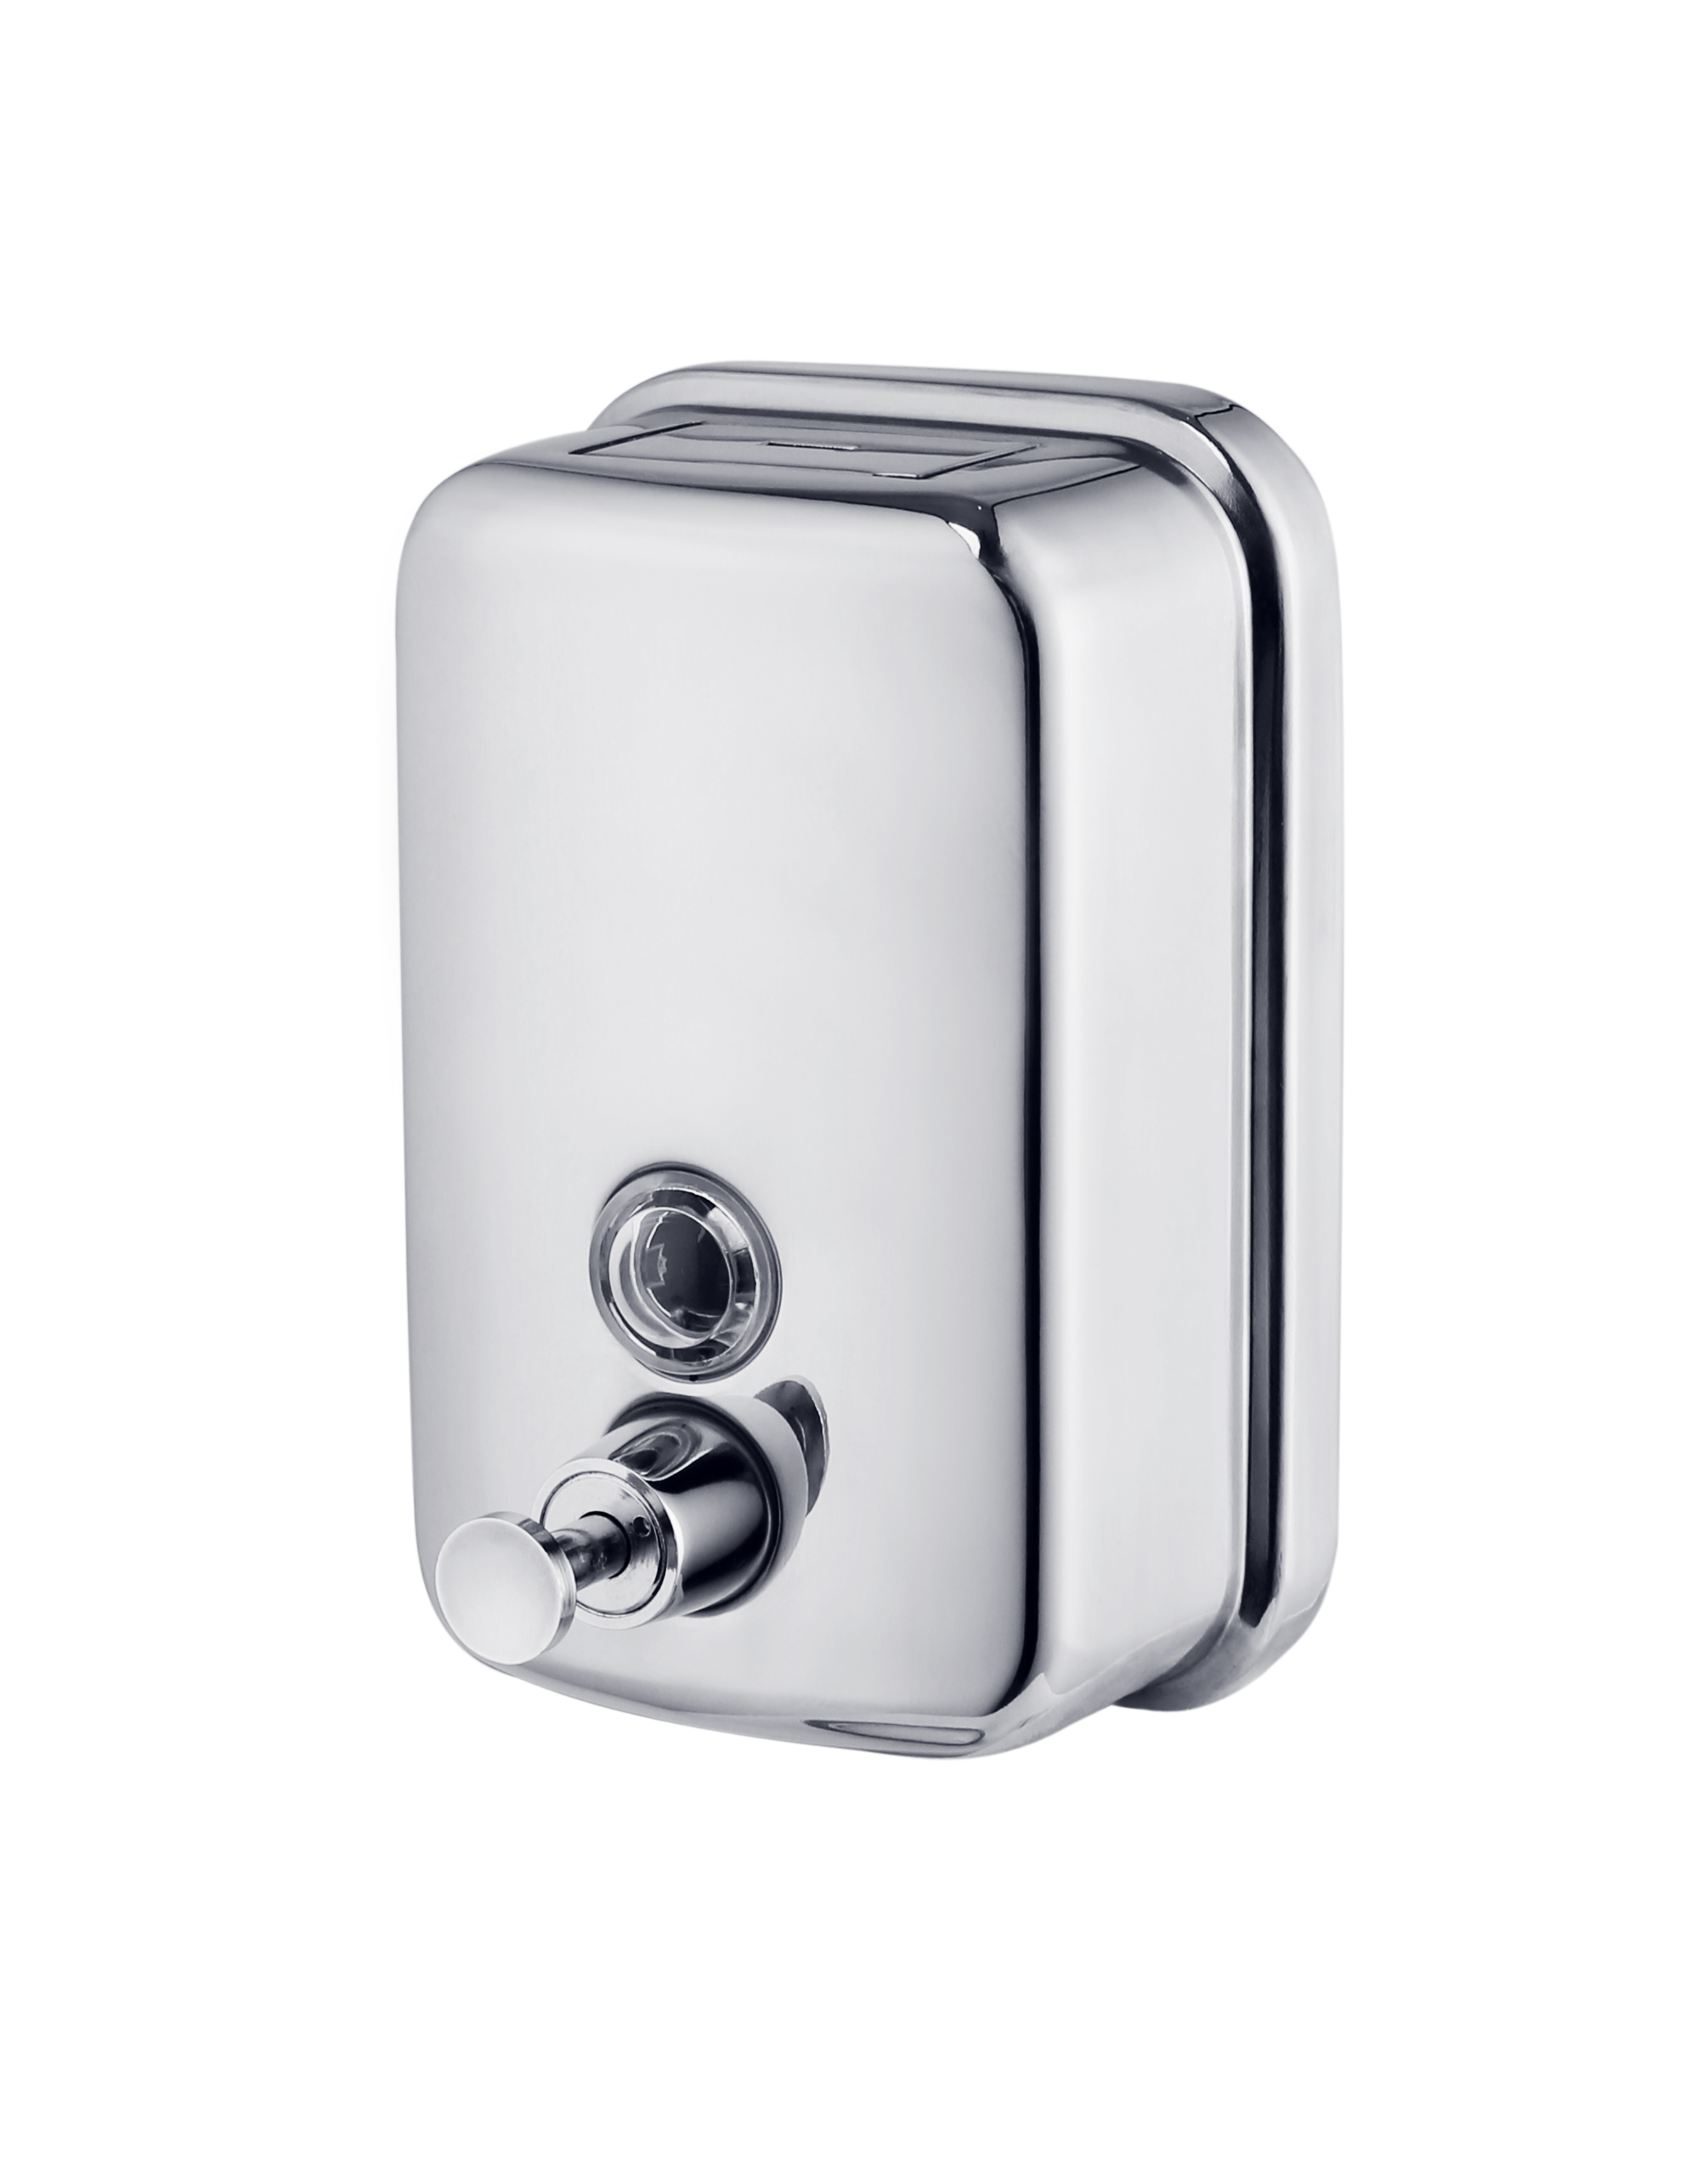 Large Capacity Stainless Steel Soap Dispenser